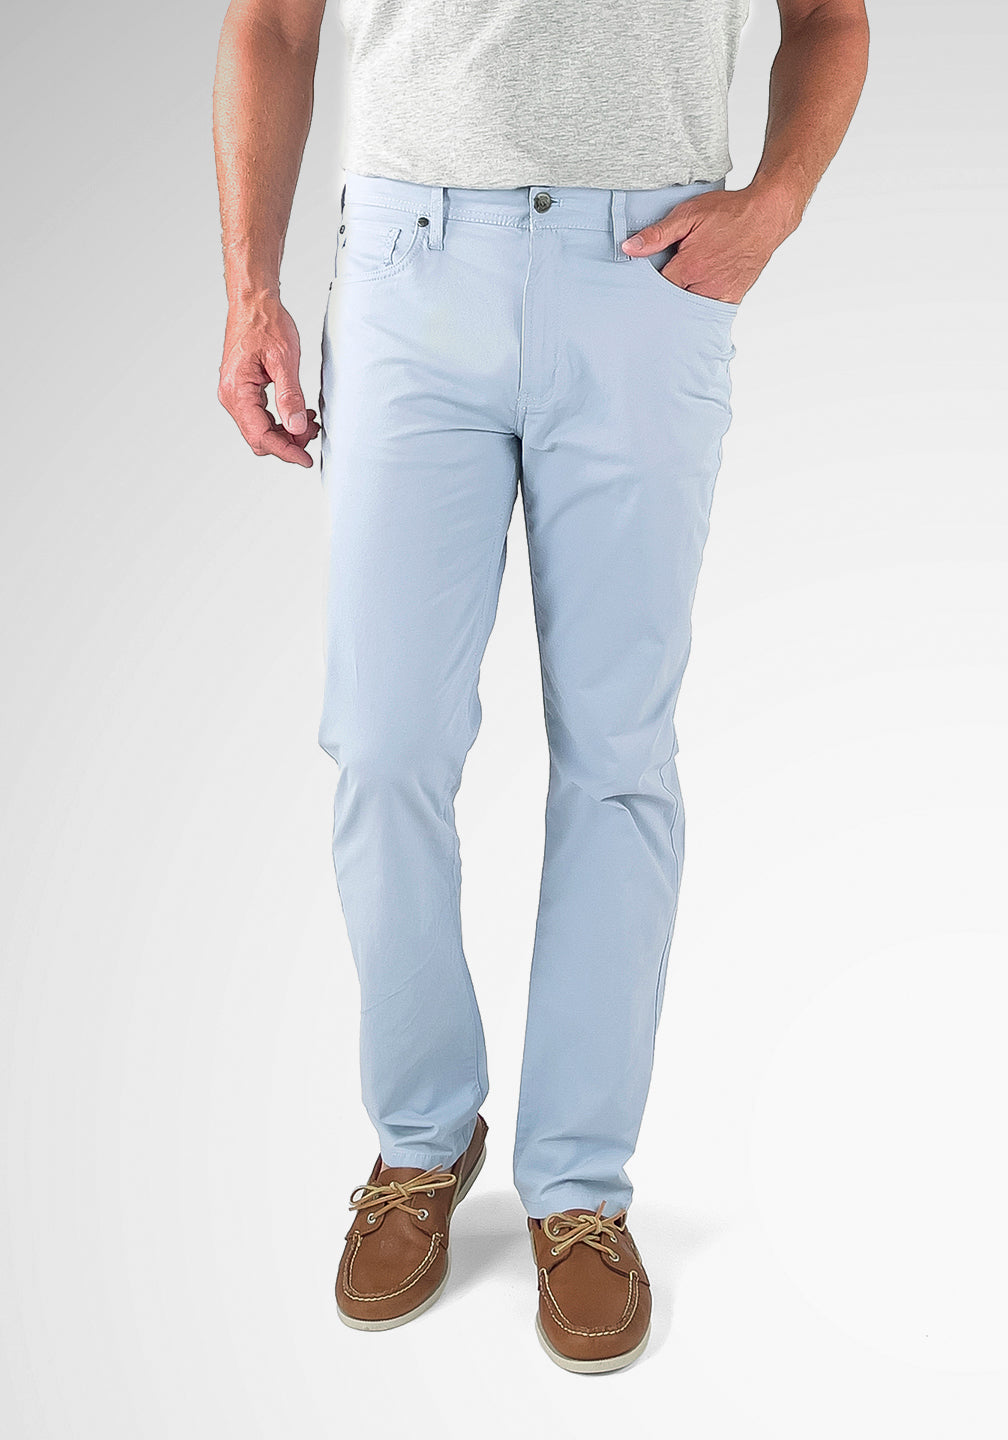 Airotec® Athletic Fit Cotton/Nylon 5-Pocket Pants